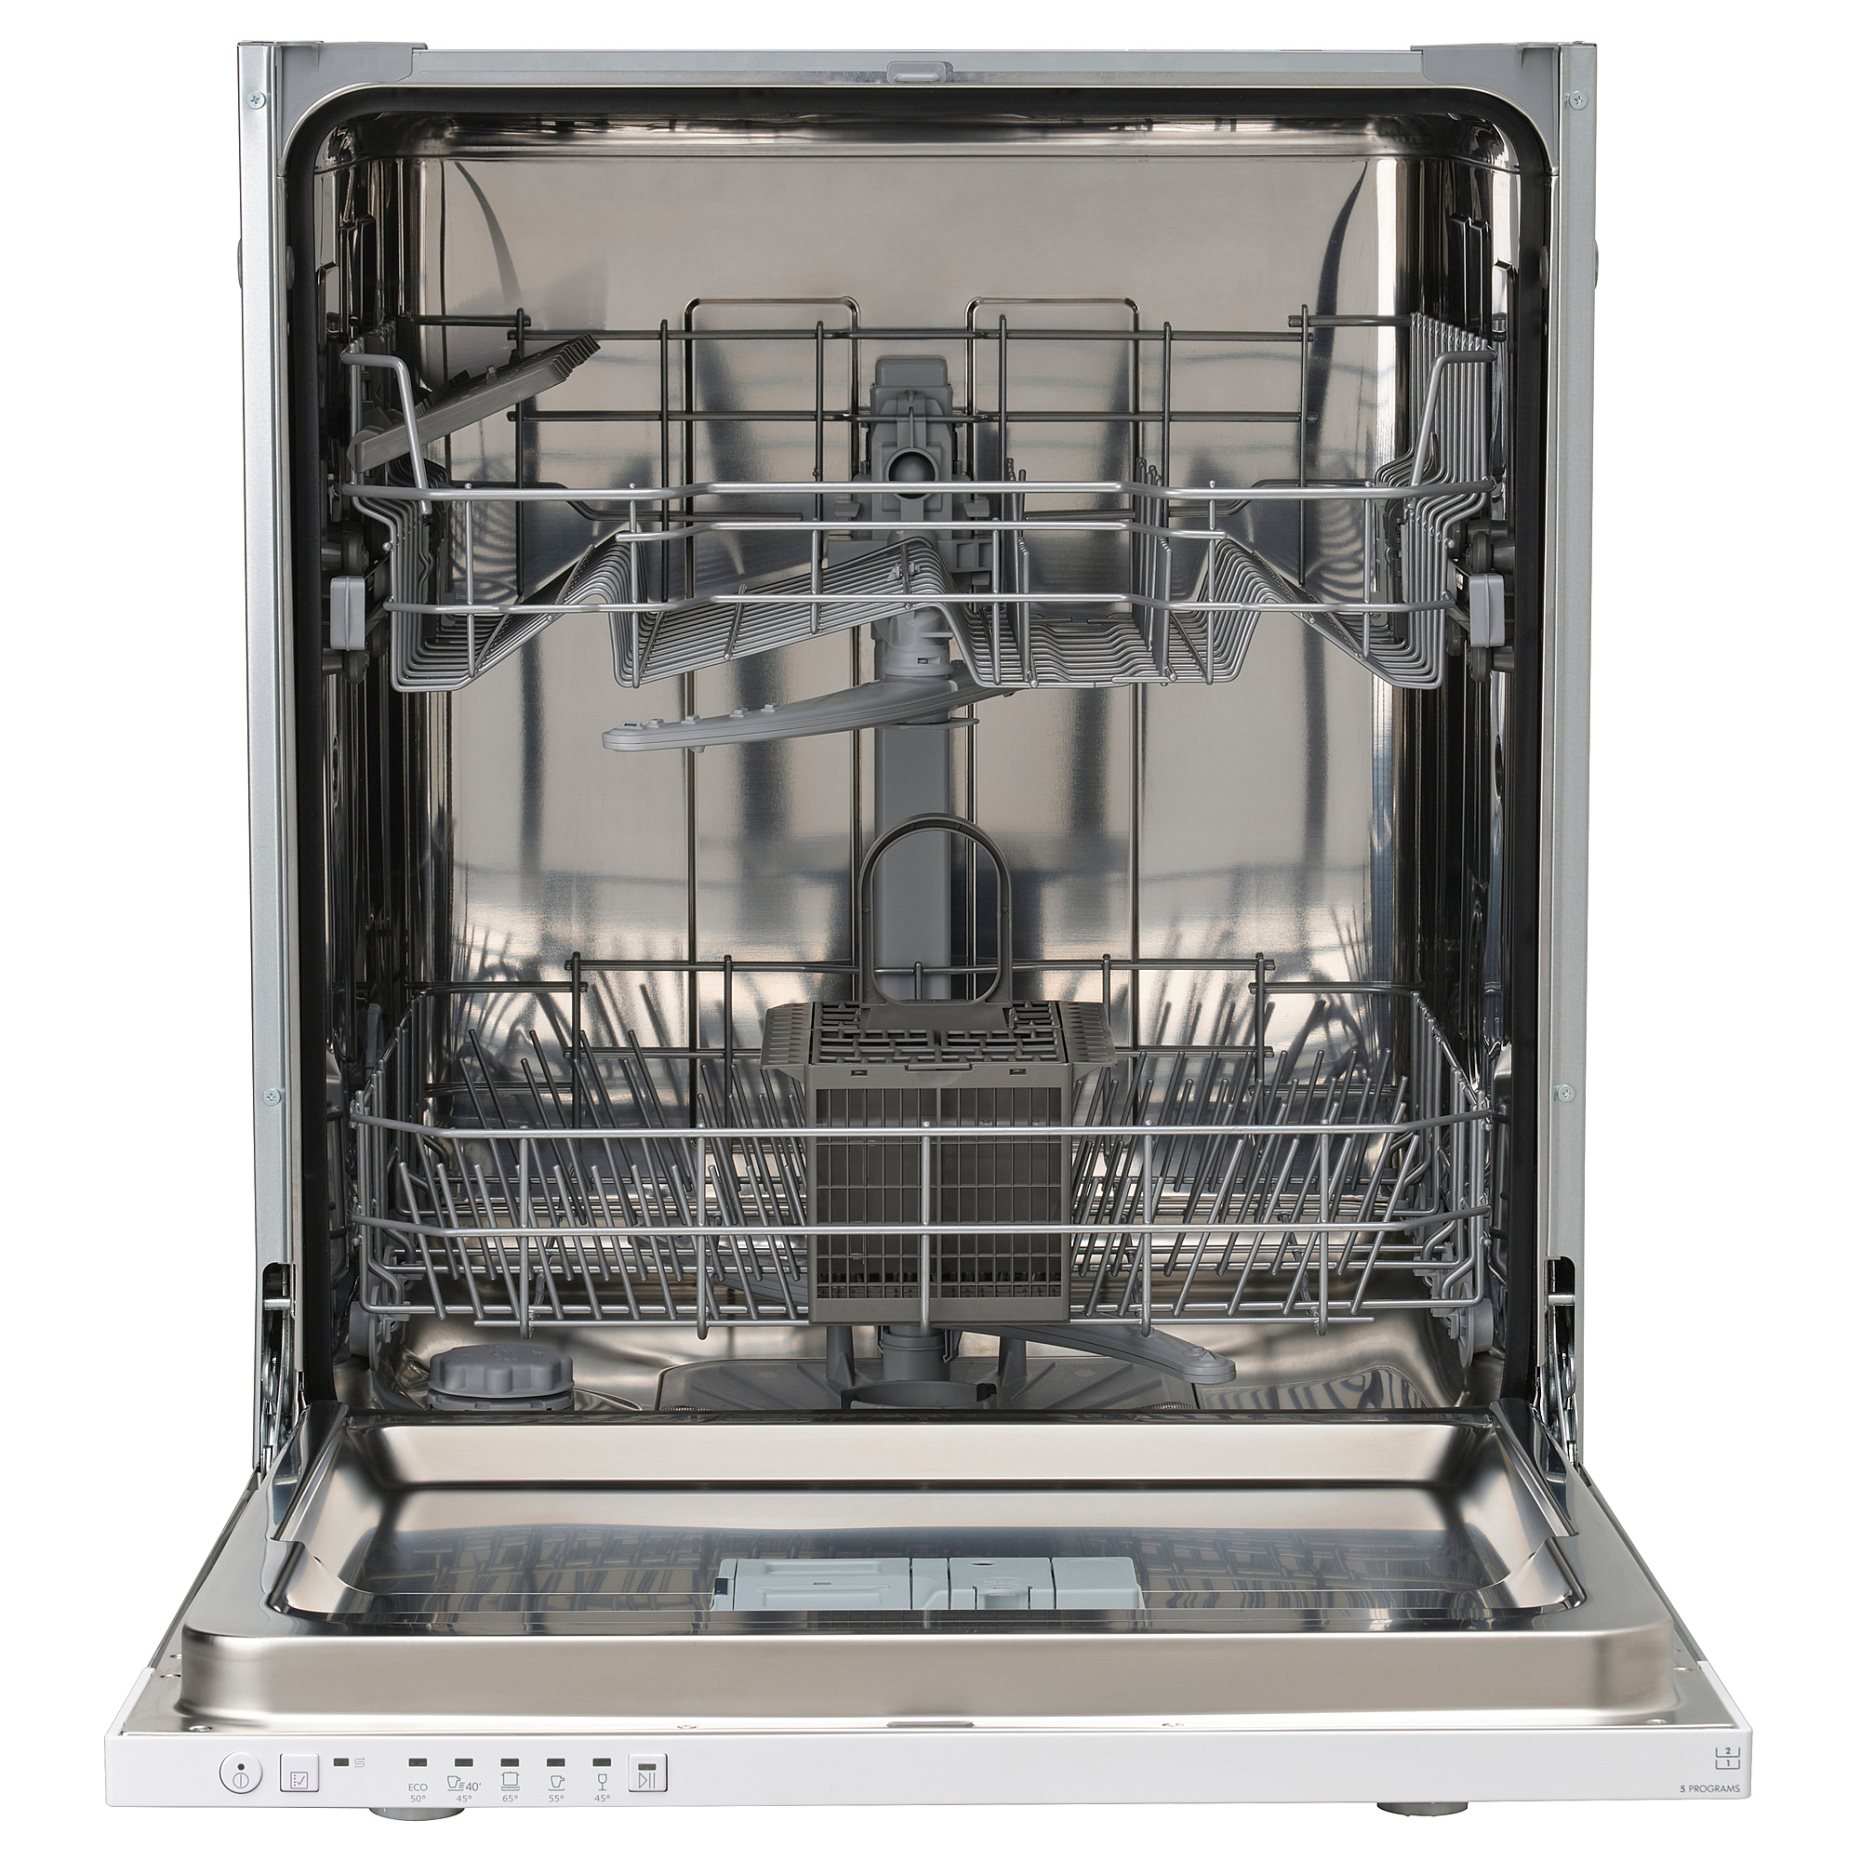 LAGAN, integrated dishwasher, 60 cm, 005.680.21